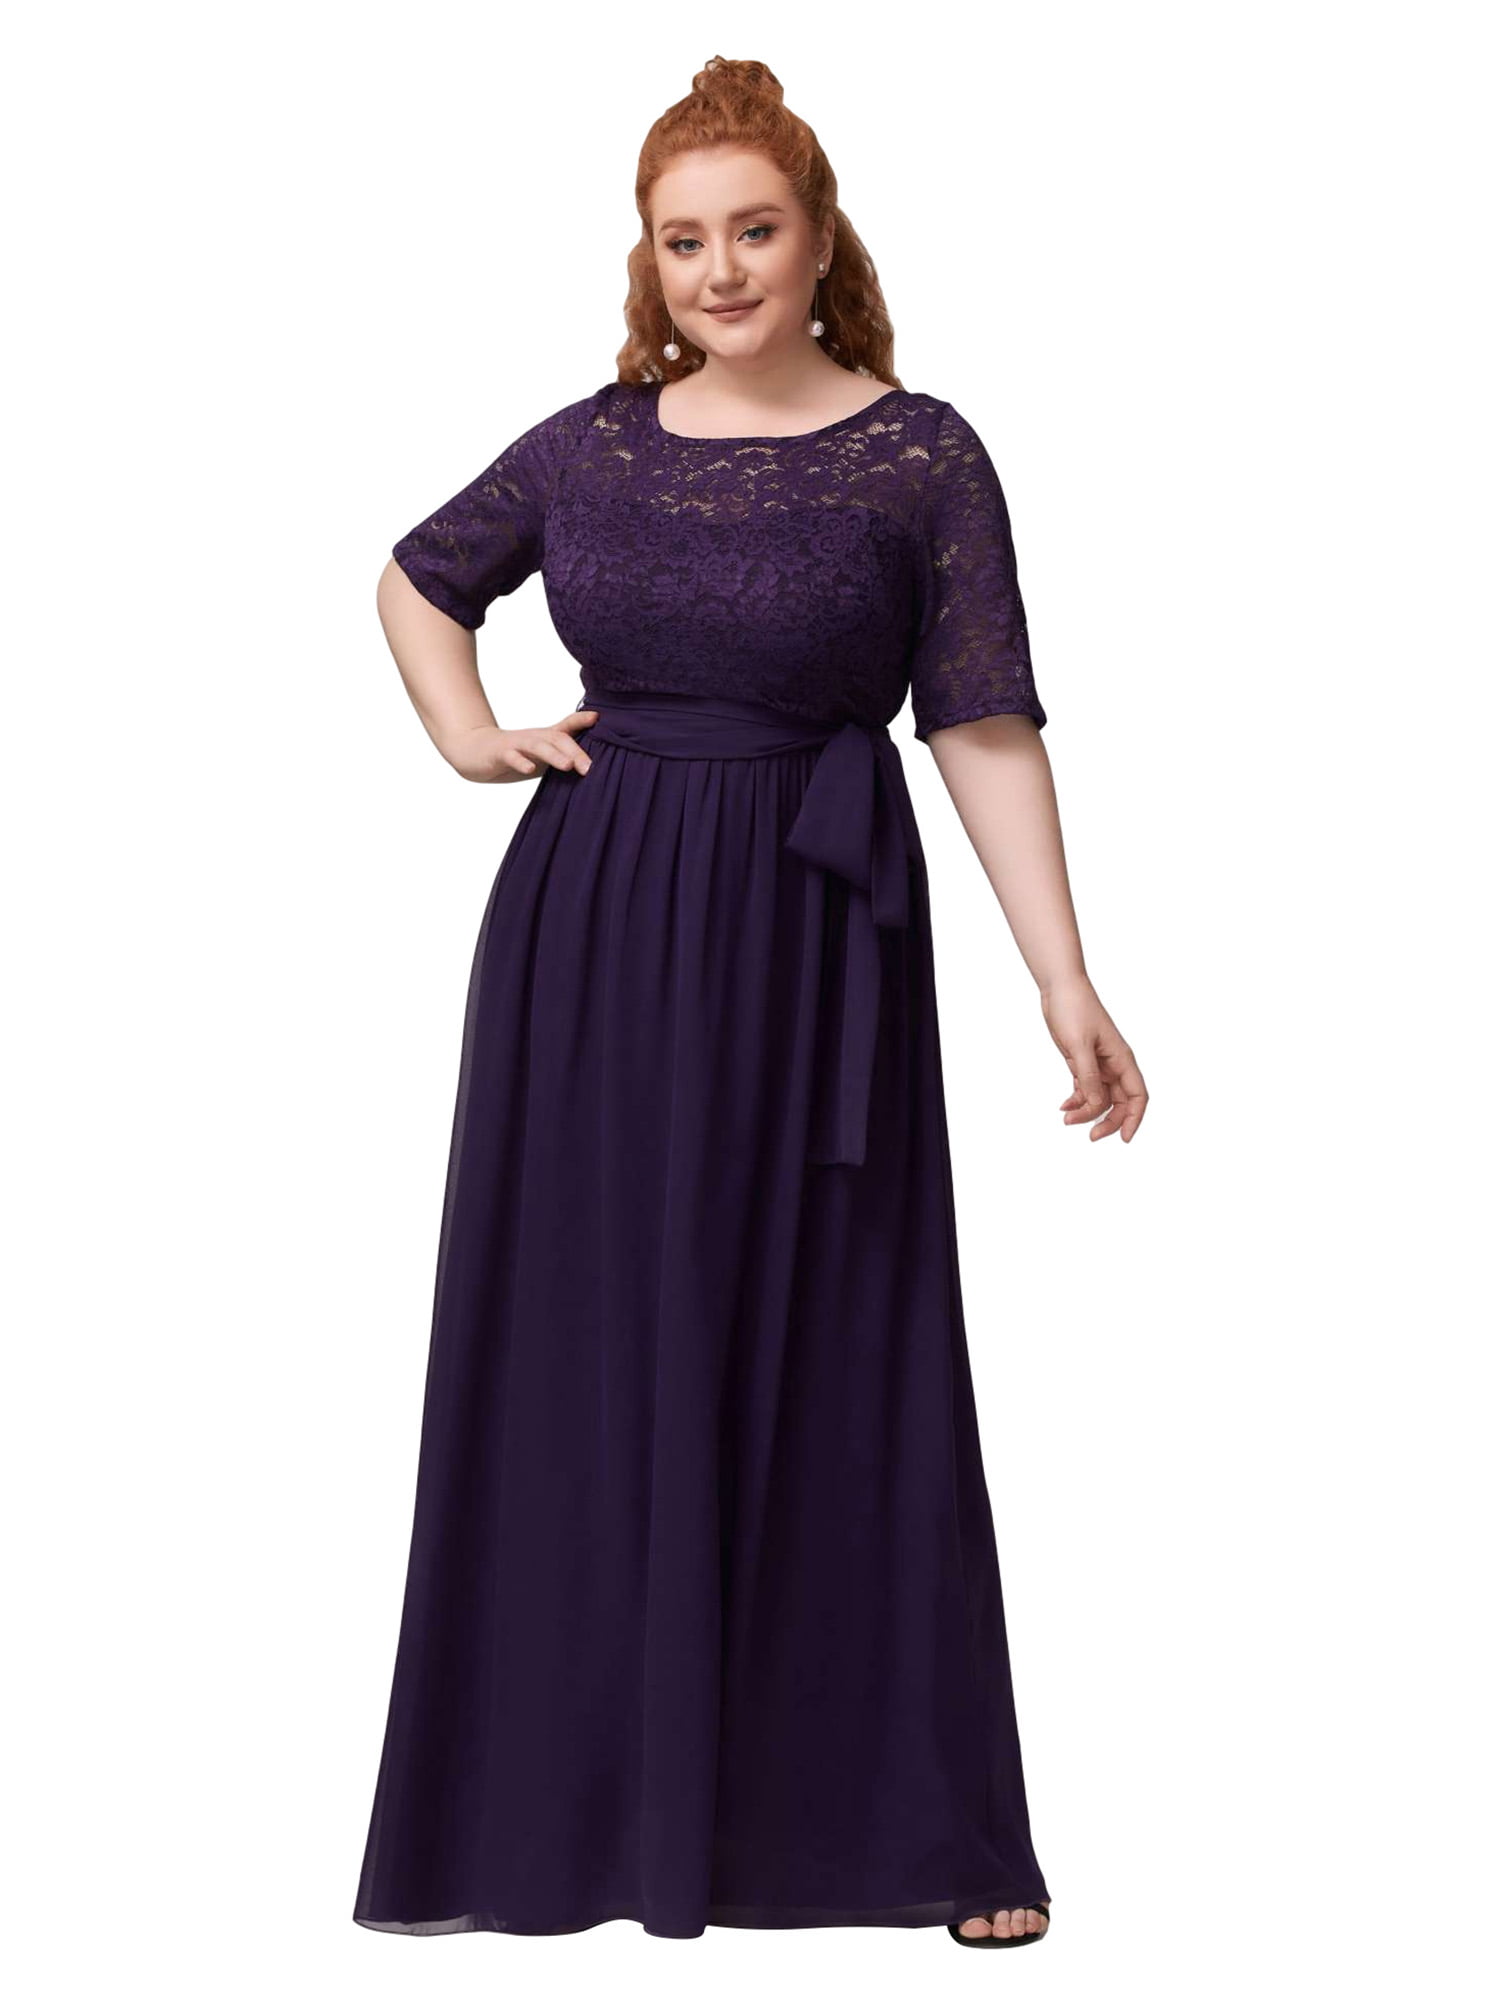 Ladies Purple and Black Floral Design Dressy Summer Maxi Dress Size 14